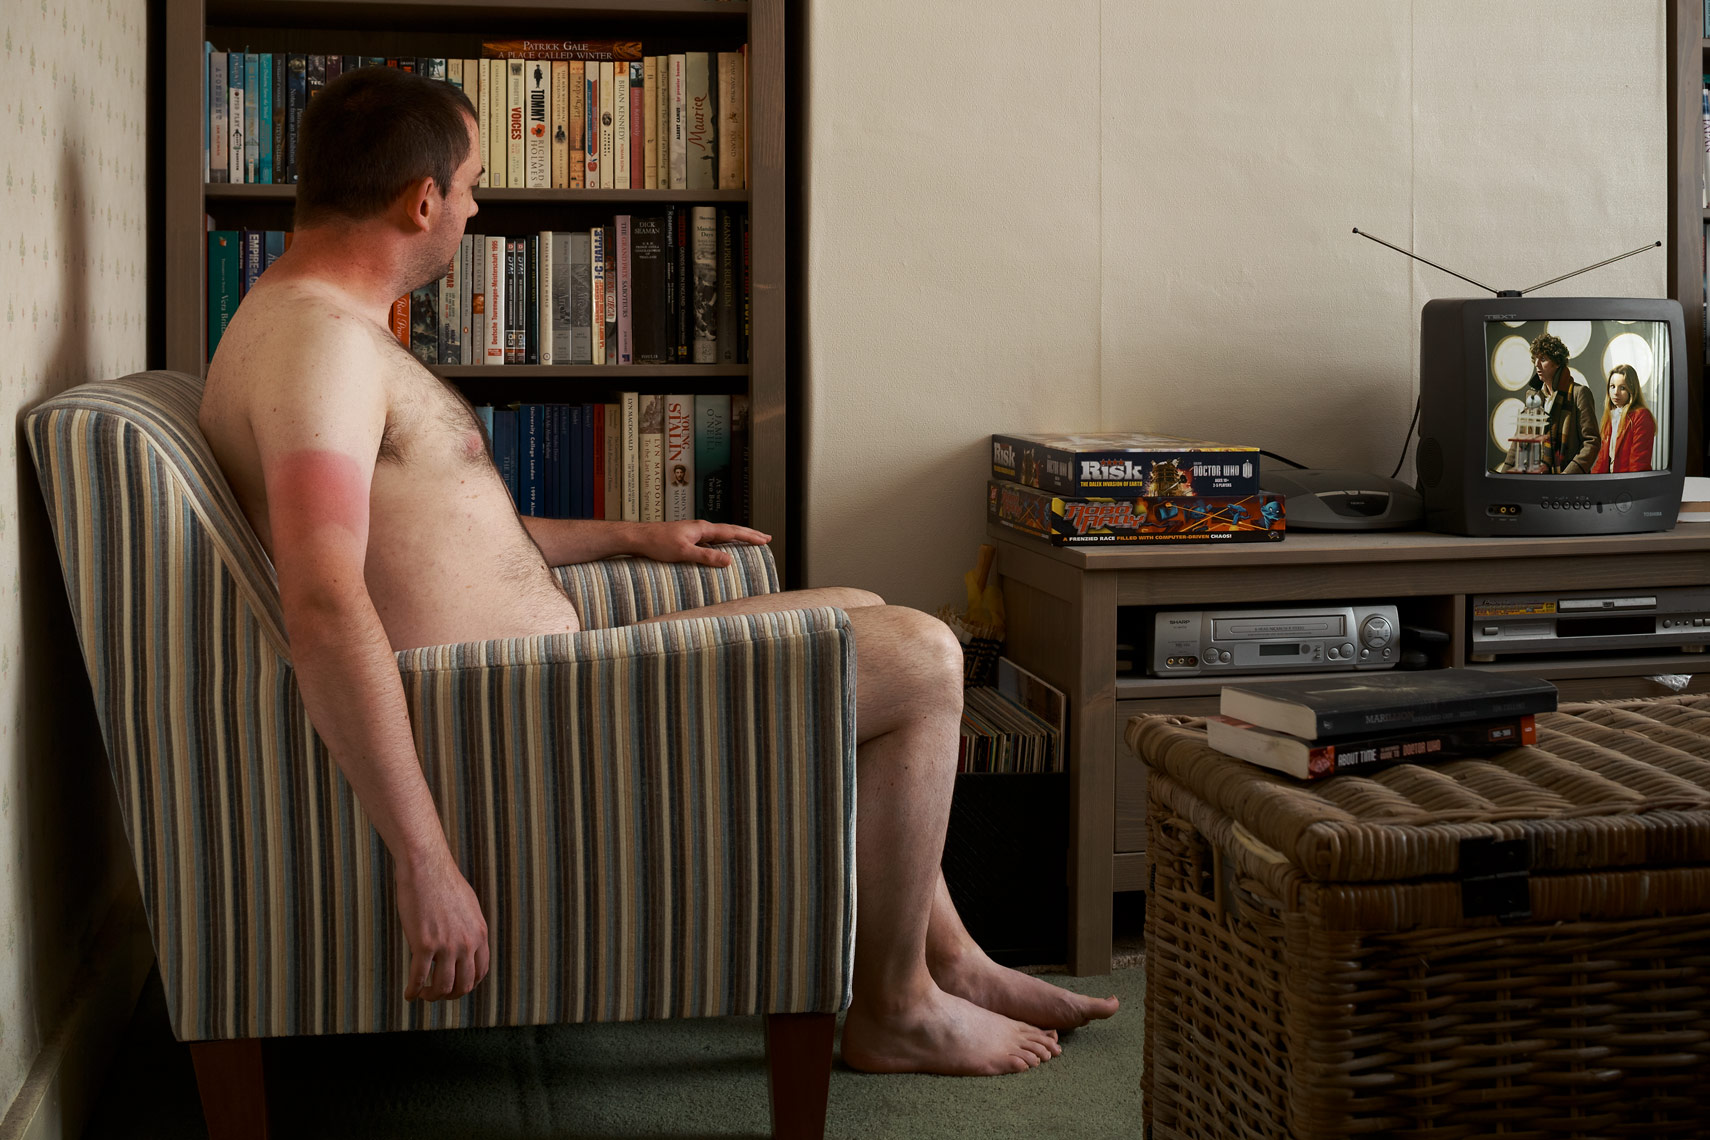 Domestic Nudes 1 - Jospeh - by Simon Stanmore.jpg